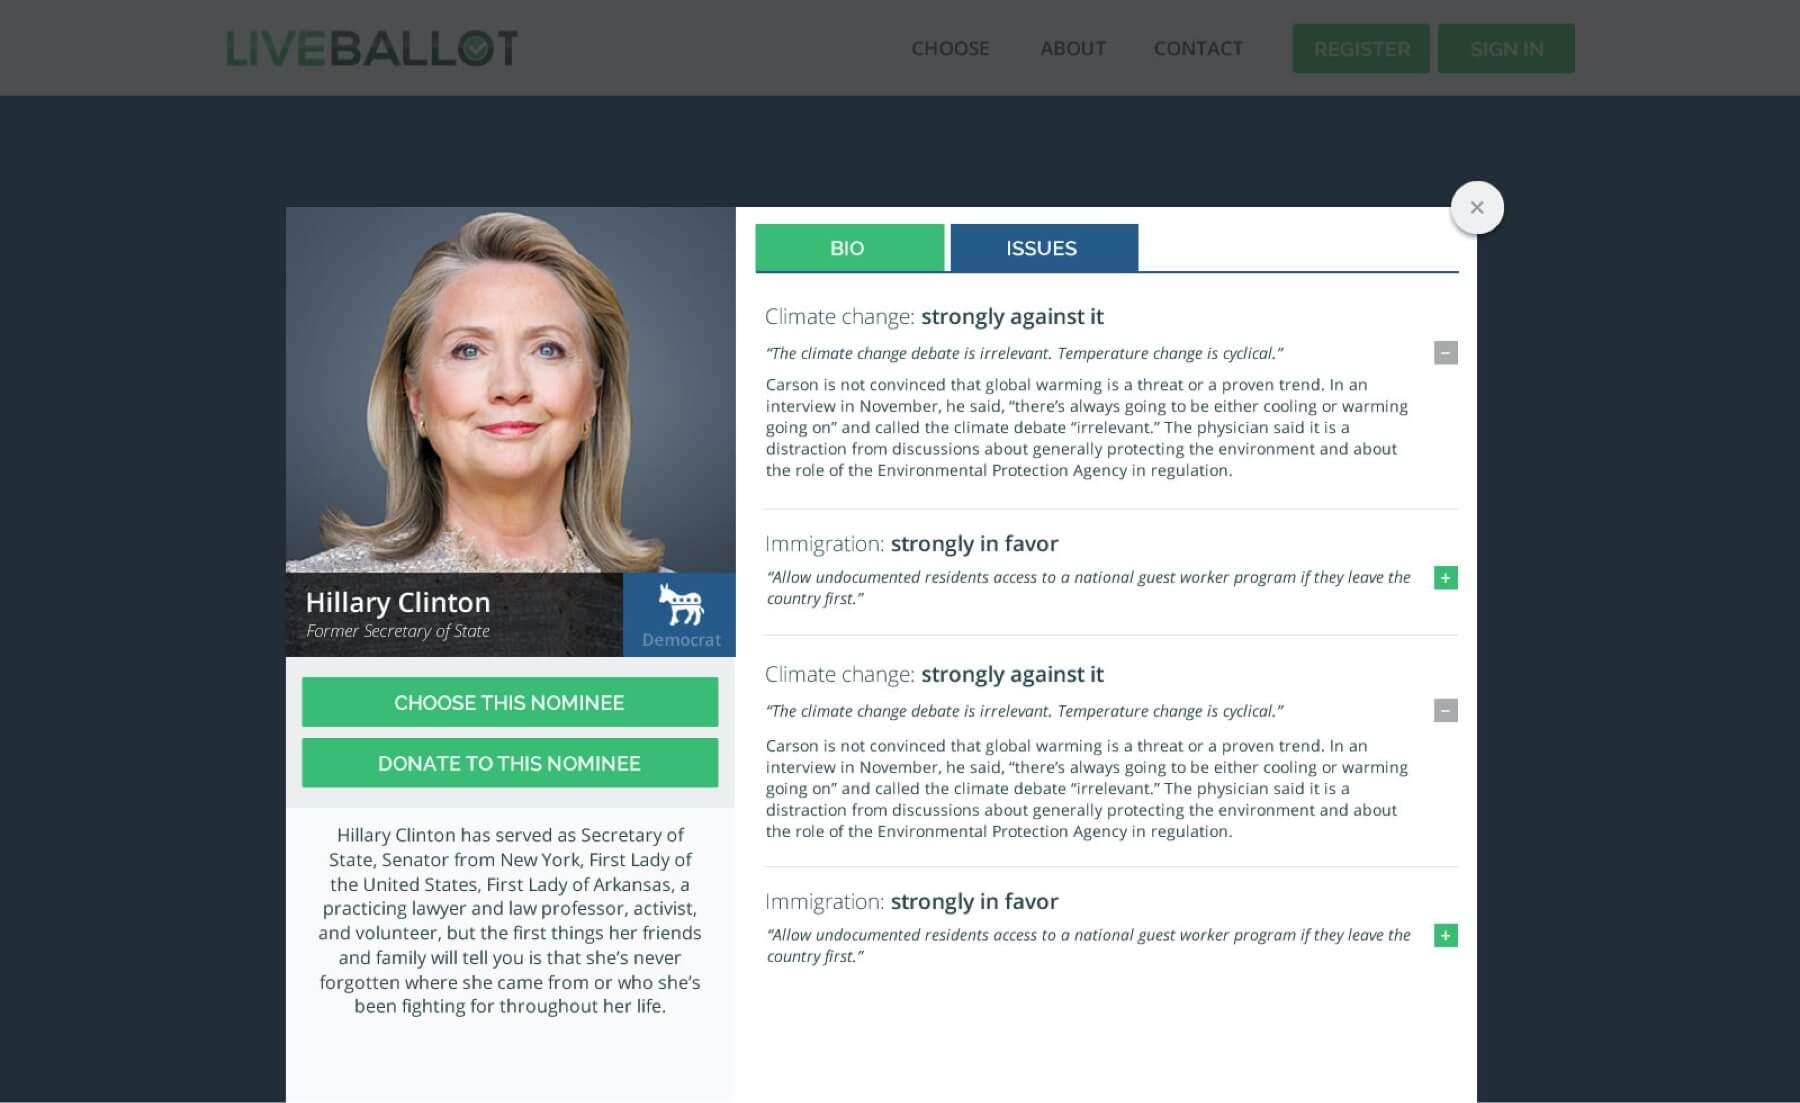 A screenshot of LiveBallot showing Hillary Clinton's bio